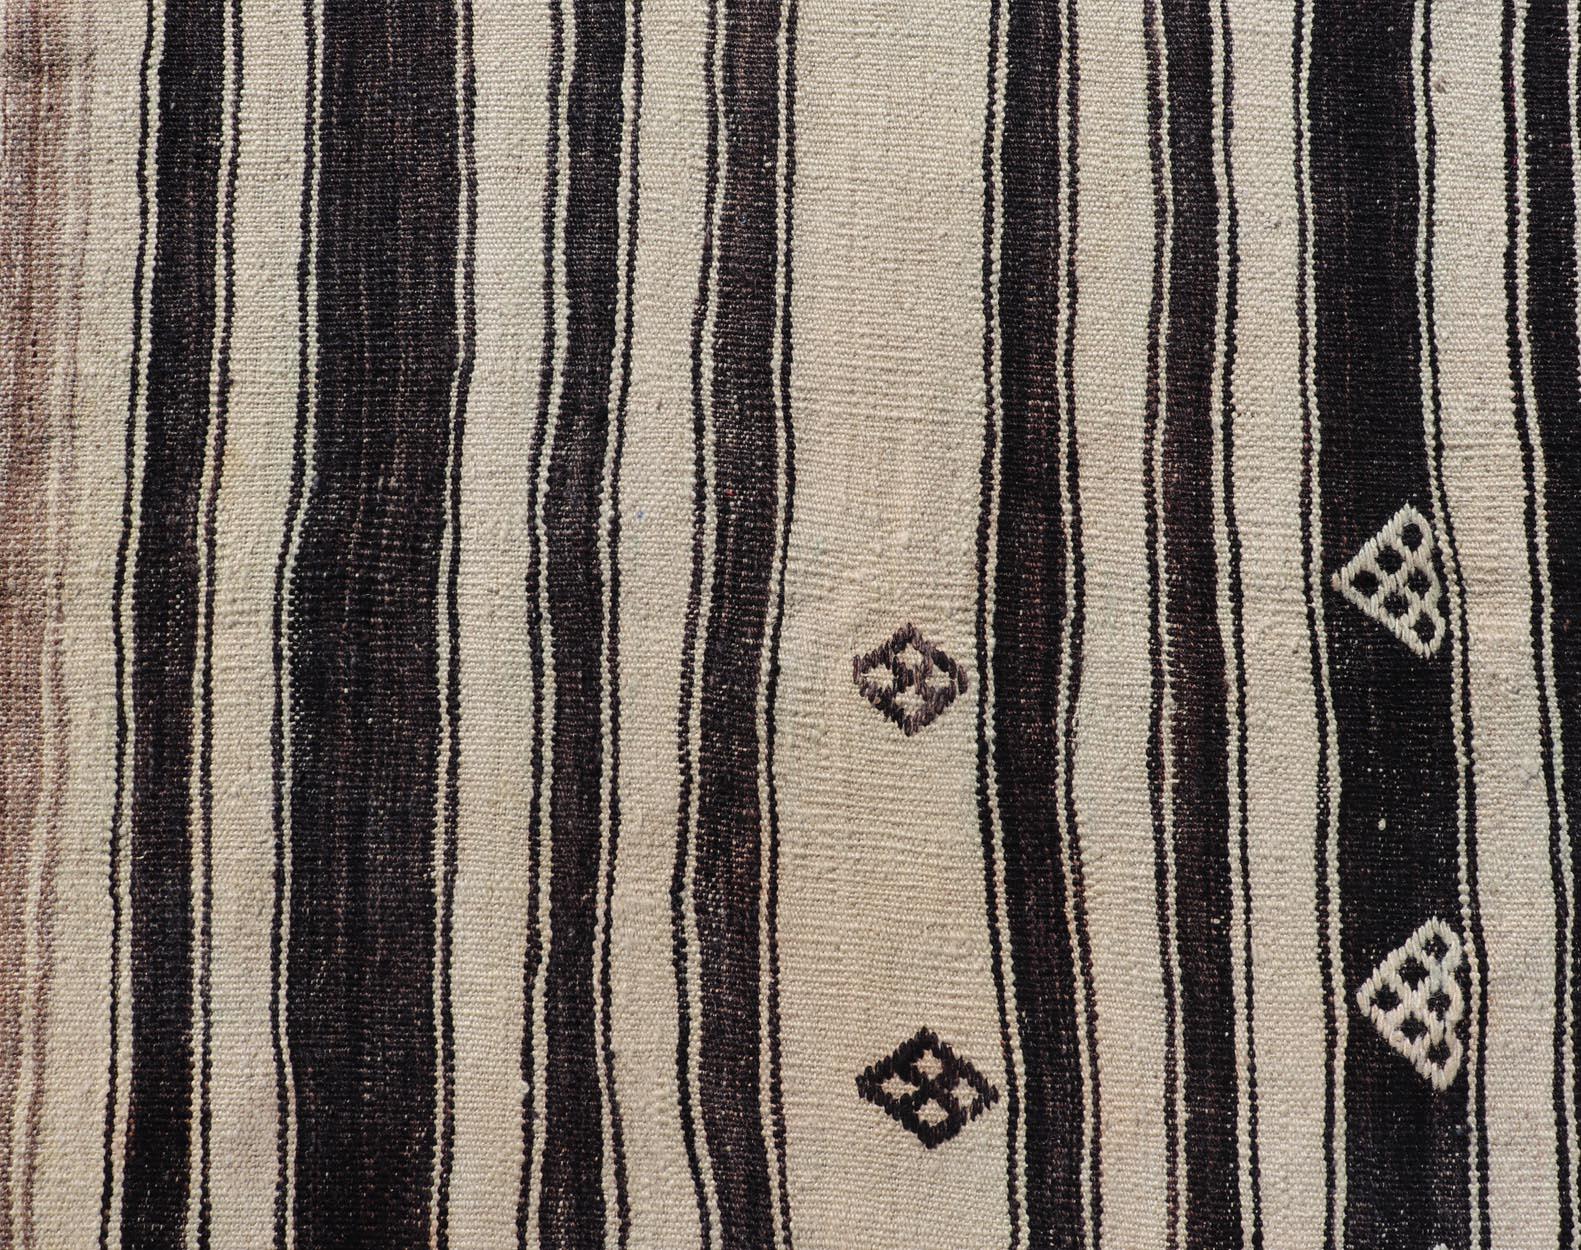 20th Century Stripe Design Turkish Vintage Flat-Weave Rug in Dark Brown, Taupe, and Cream  For Sale